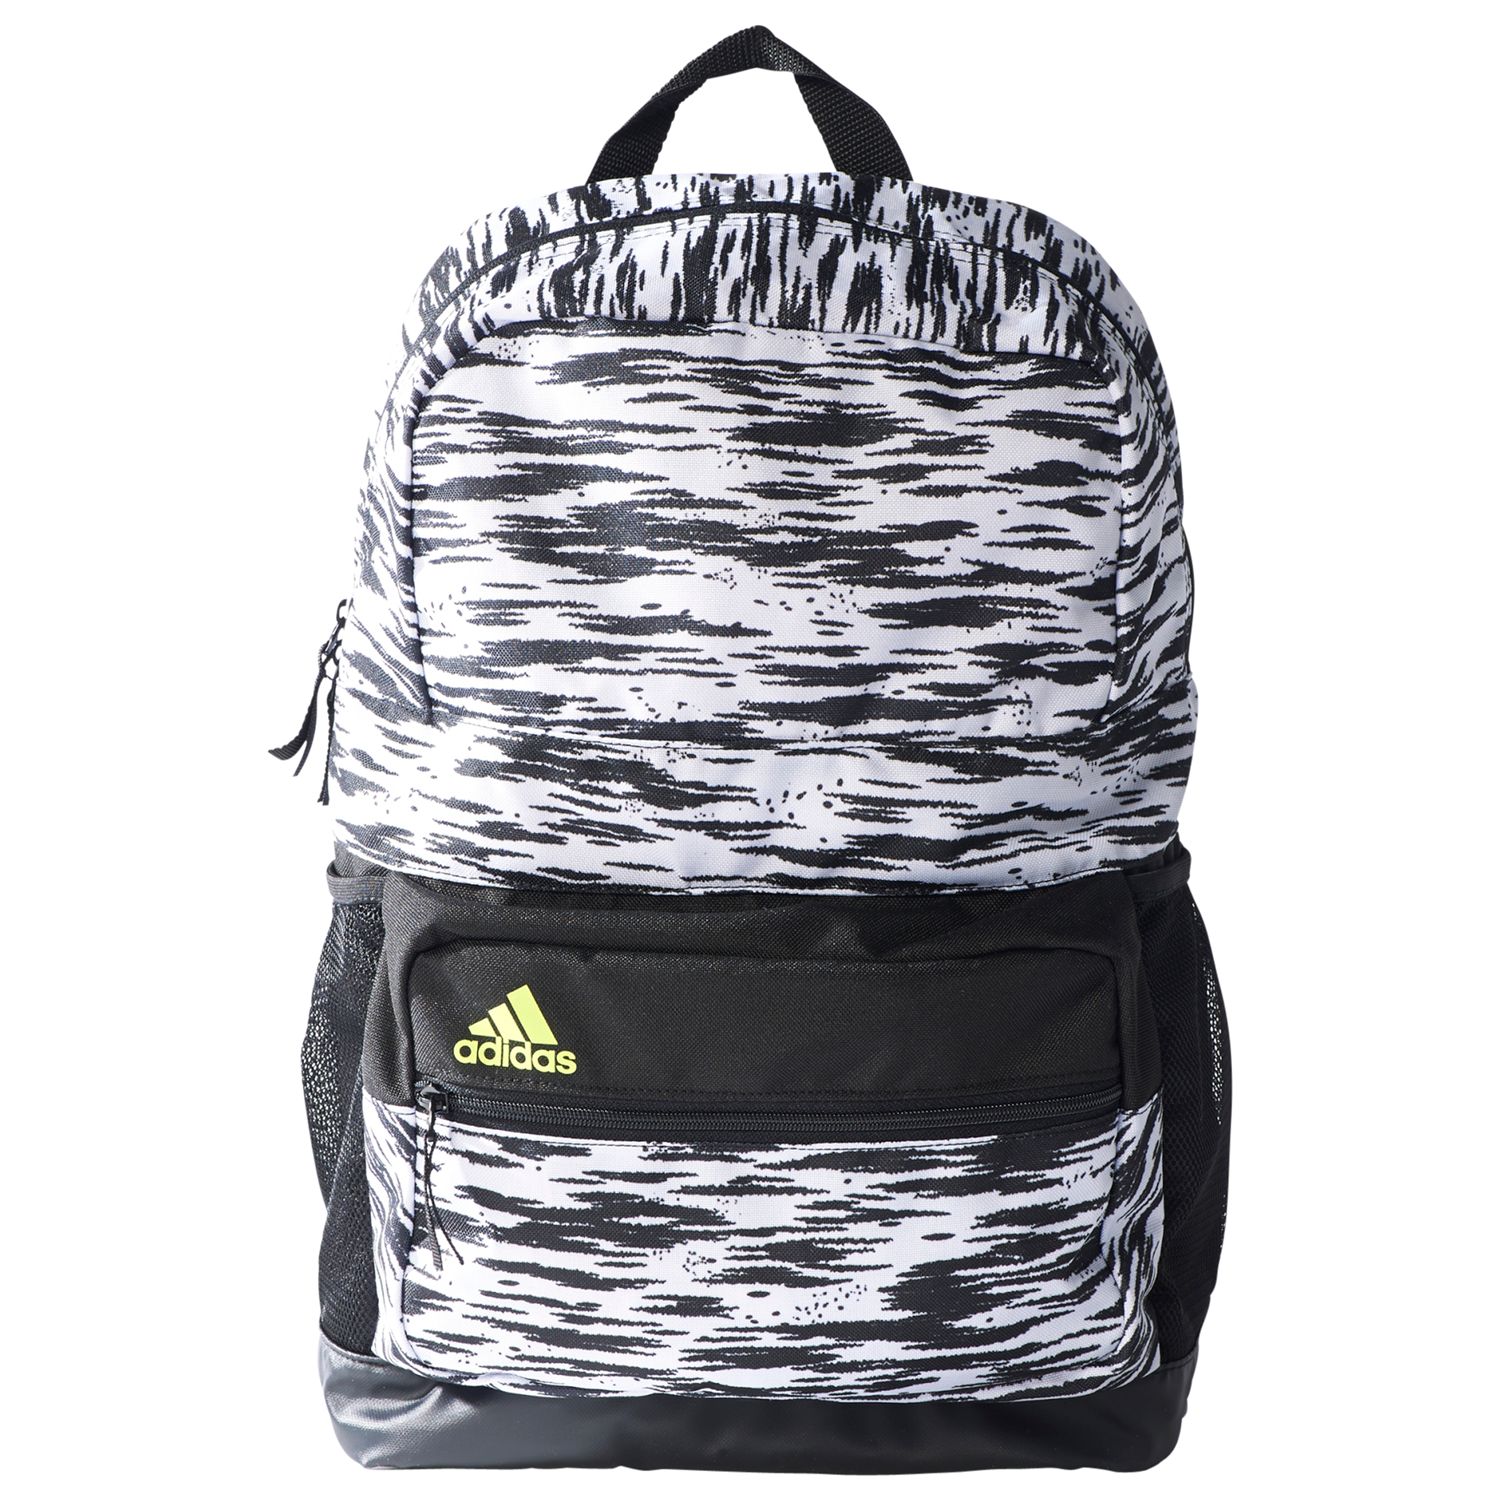 Adidas Medium Graphic Sports Backpack 